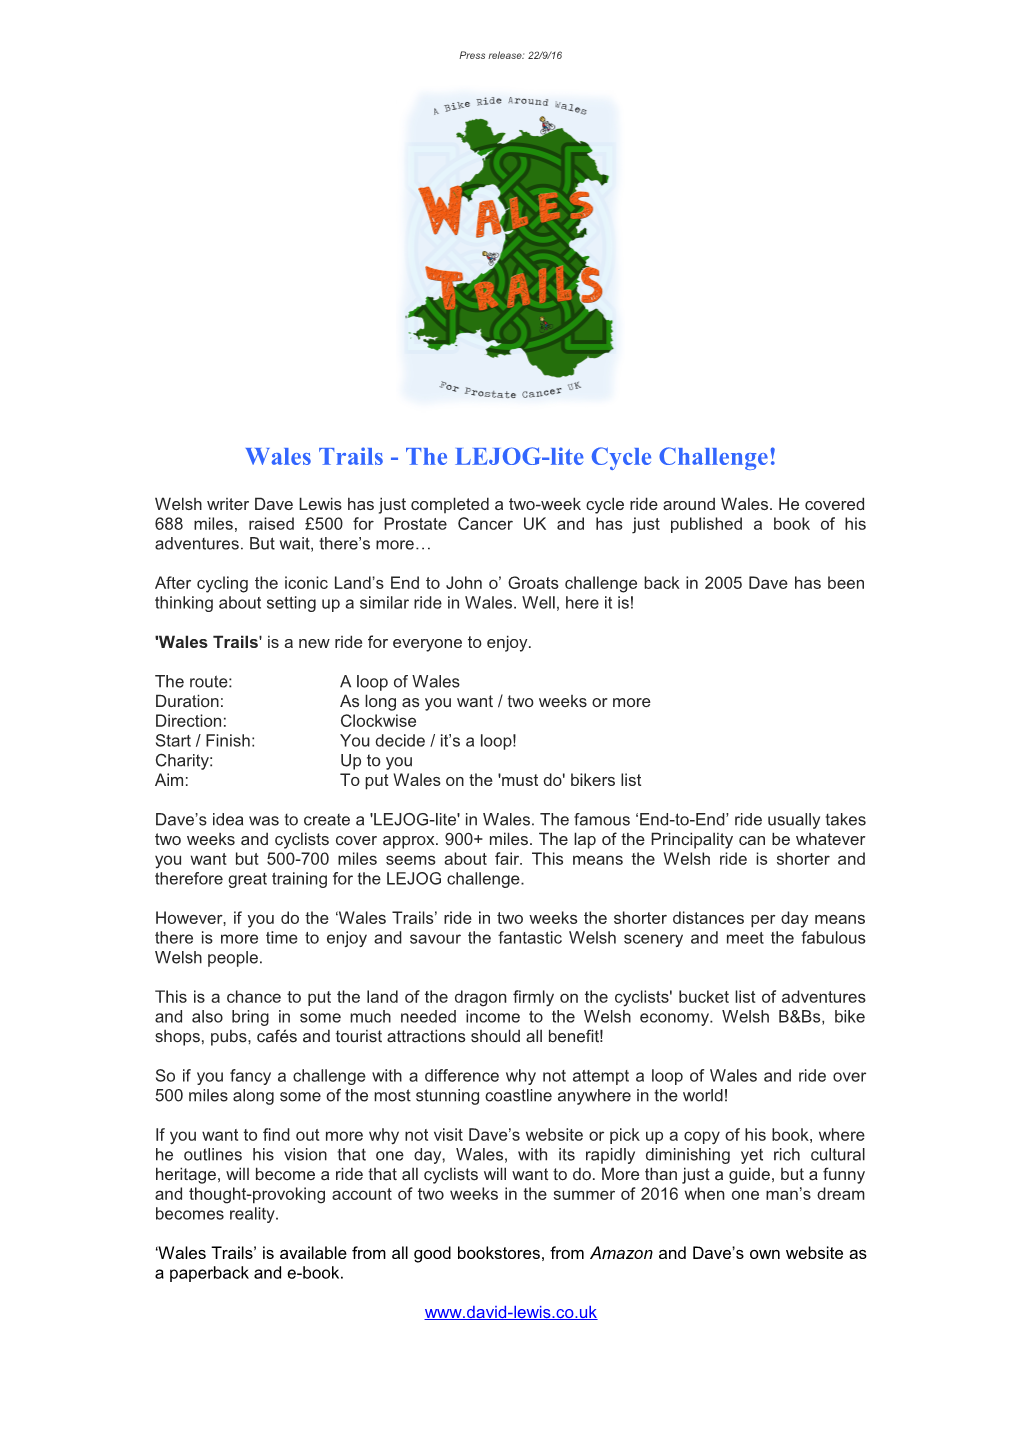 Wales Trails - the LEJOG-Lite Cycle Challenge!